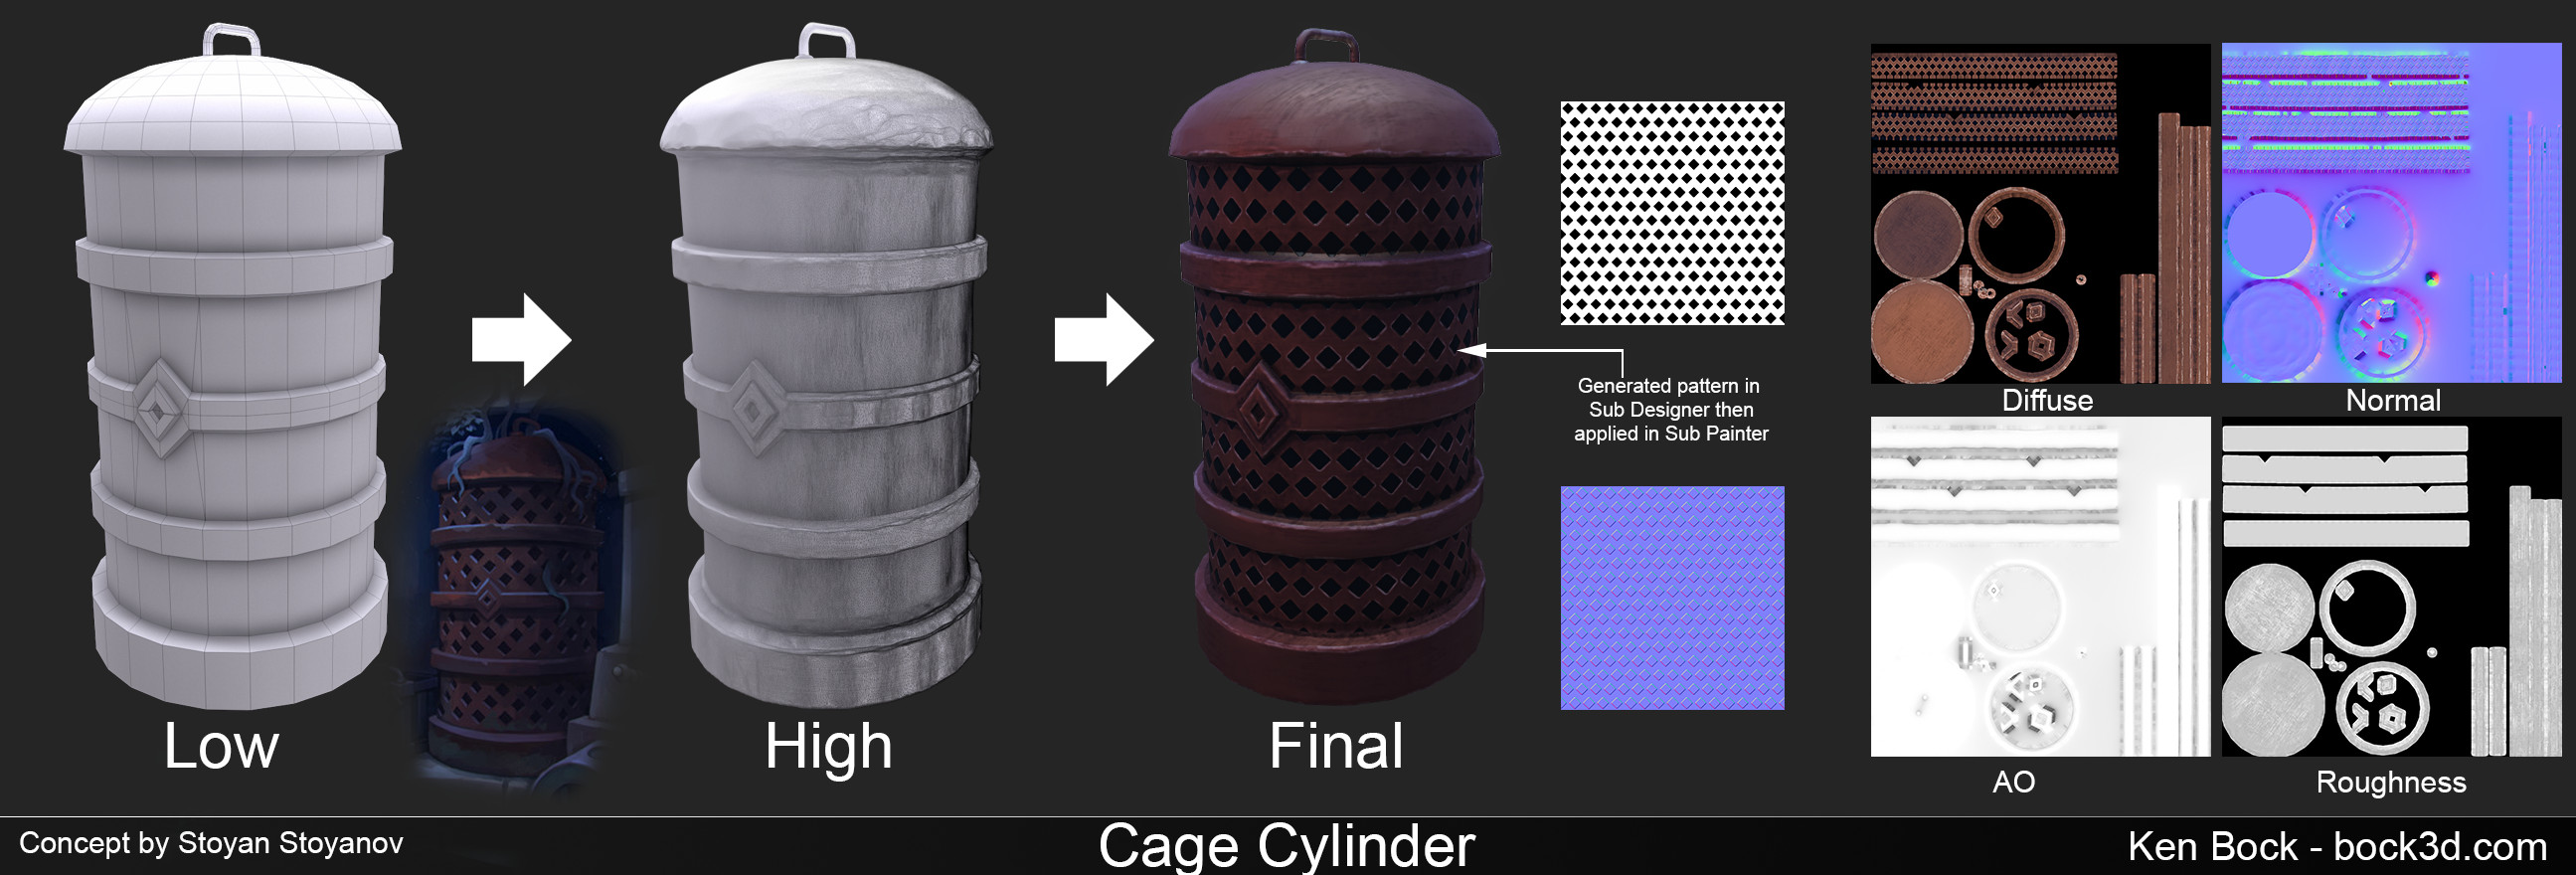 Cage Cylinder